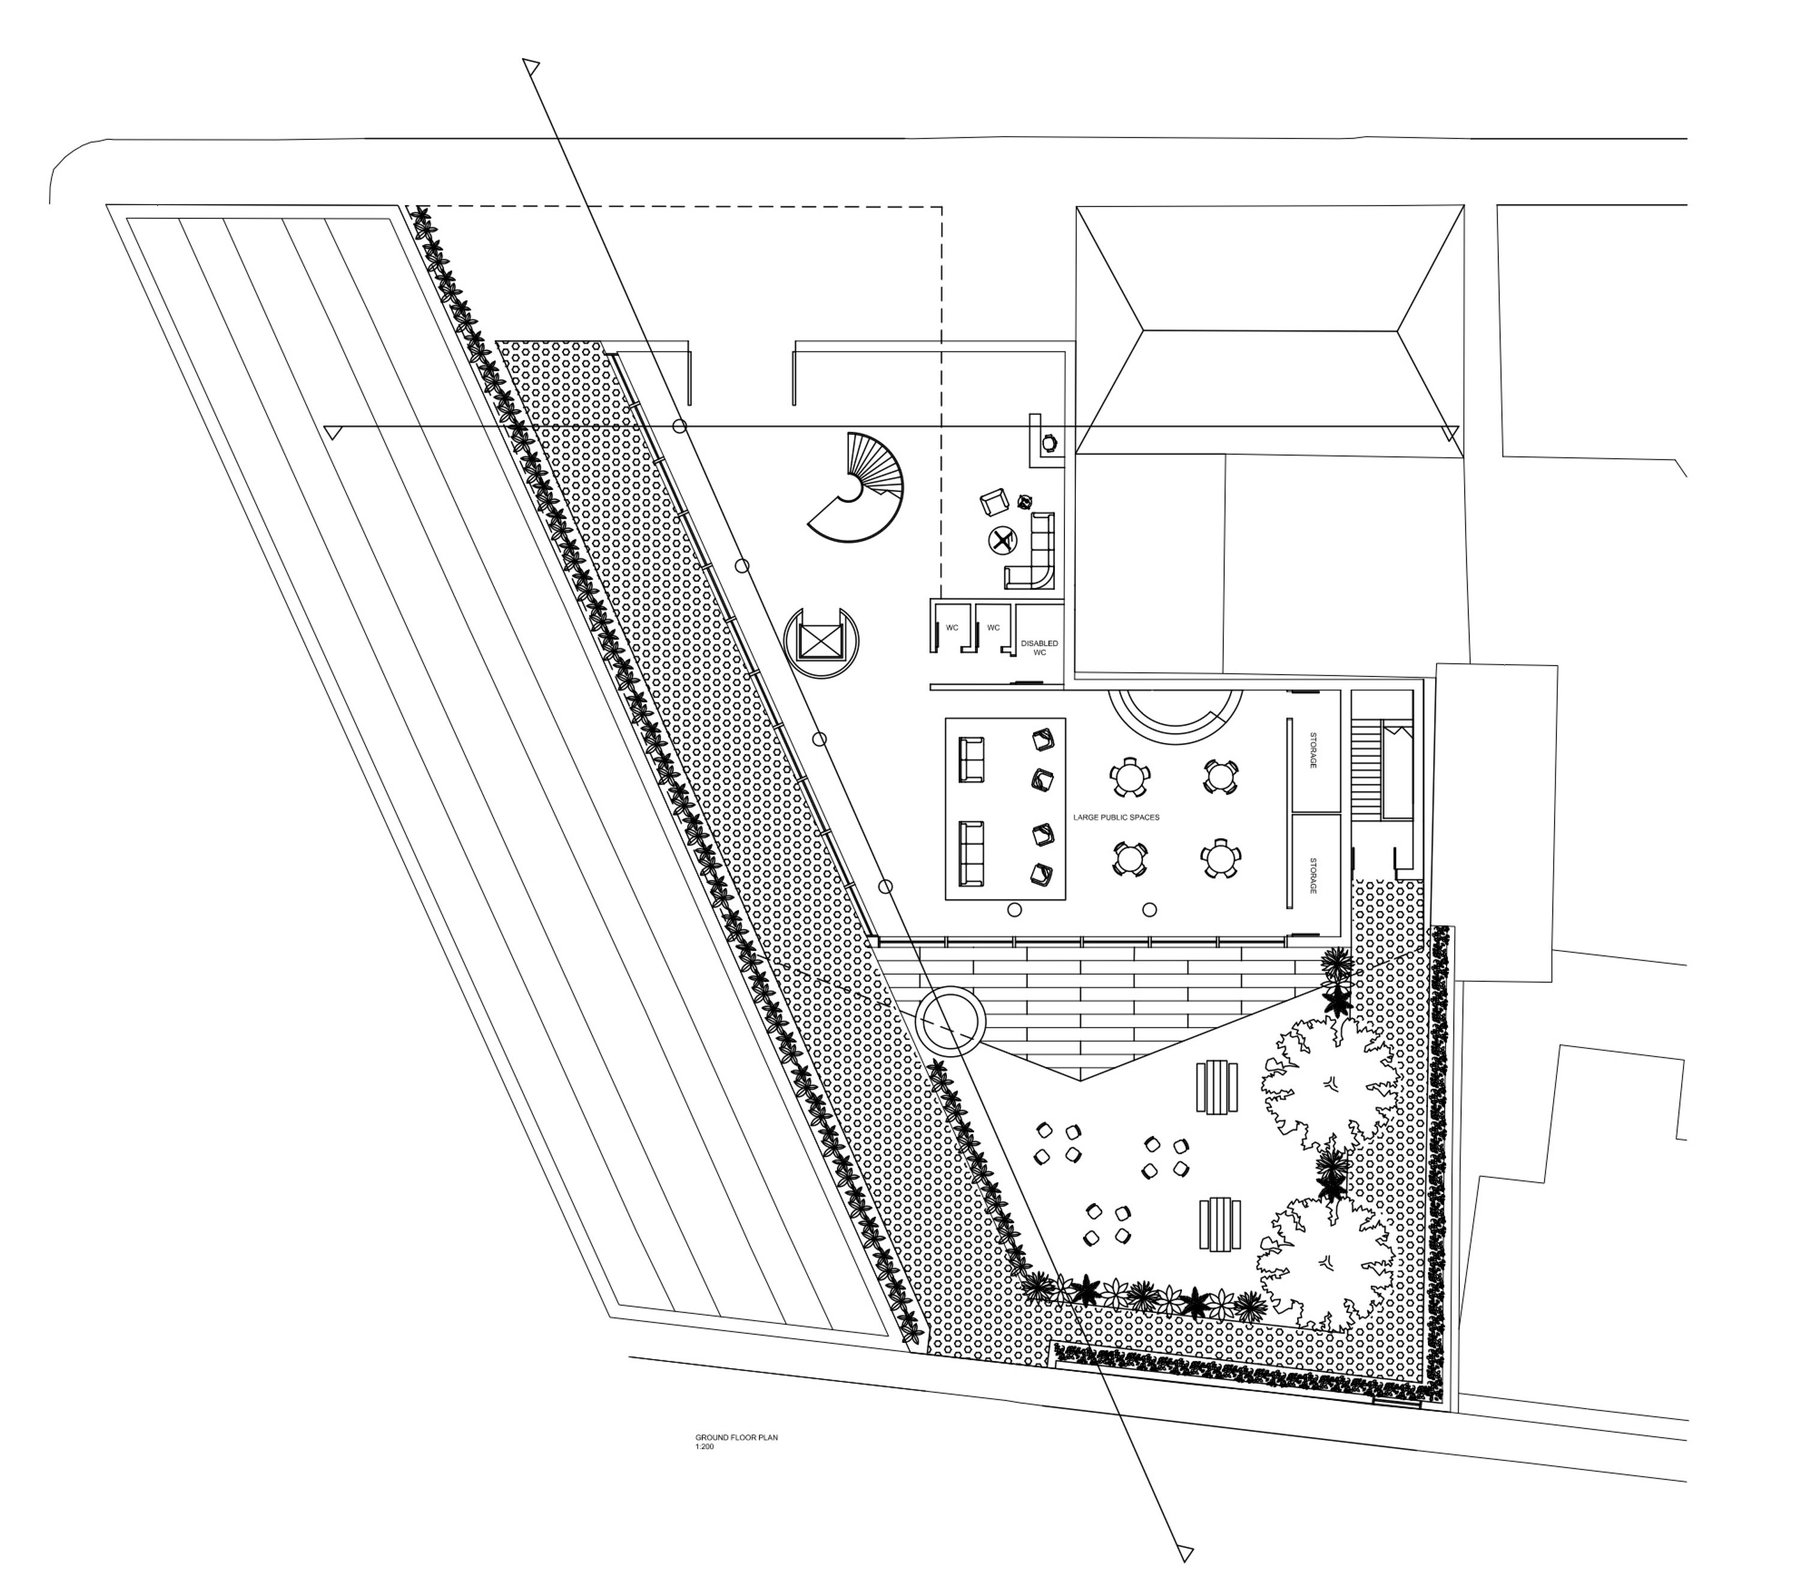 Carolina Pileggi_Building Character_Ground Floor Plan.jpg